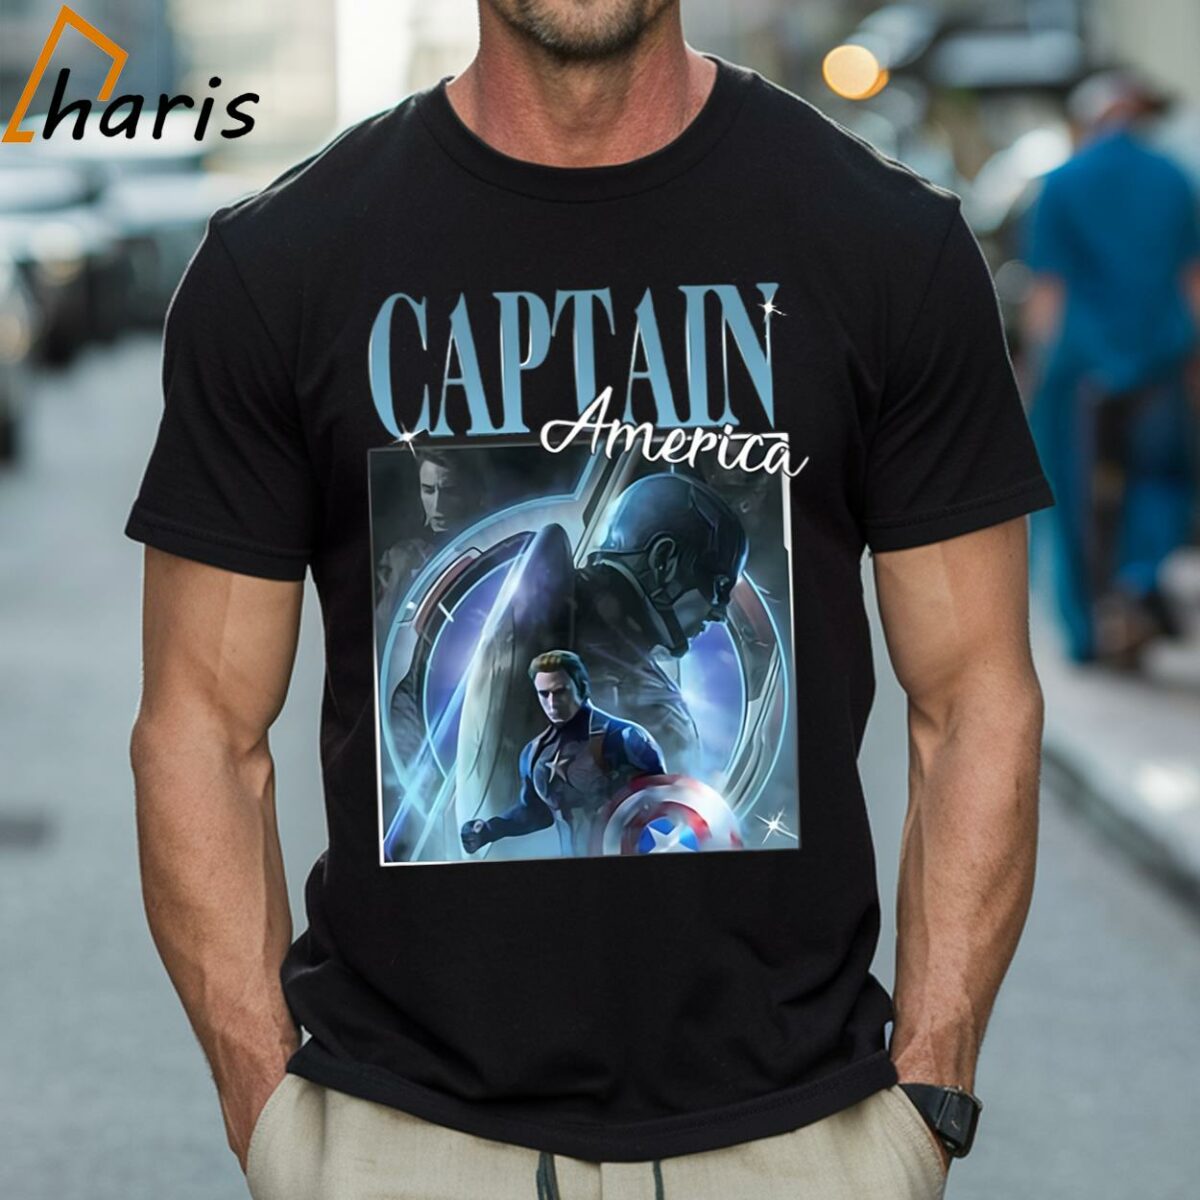 Chris Evans Captain America Vintage Shirt 1 Shirt